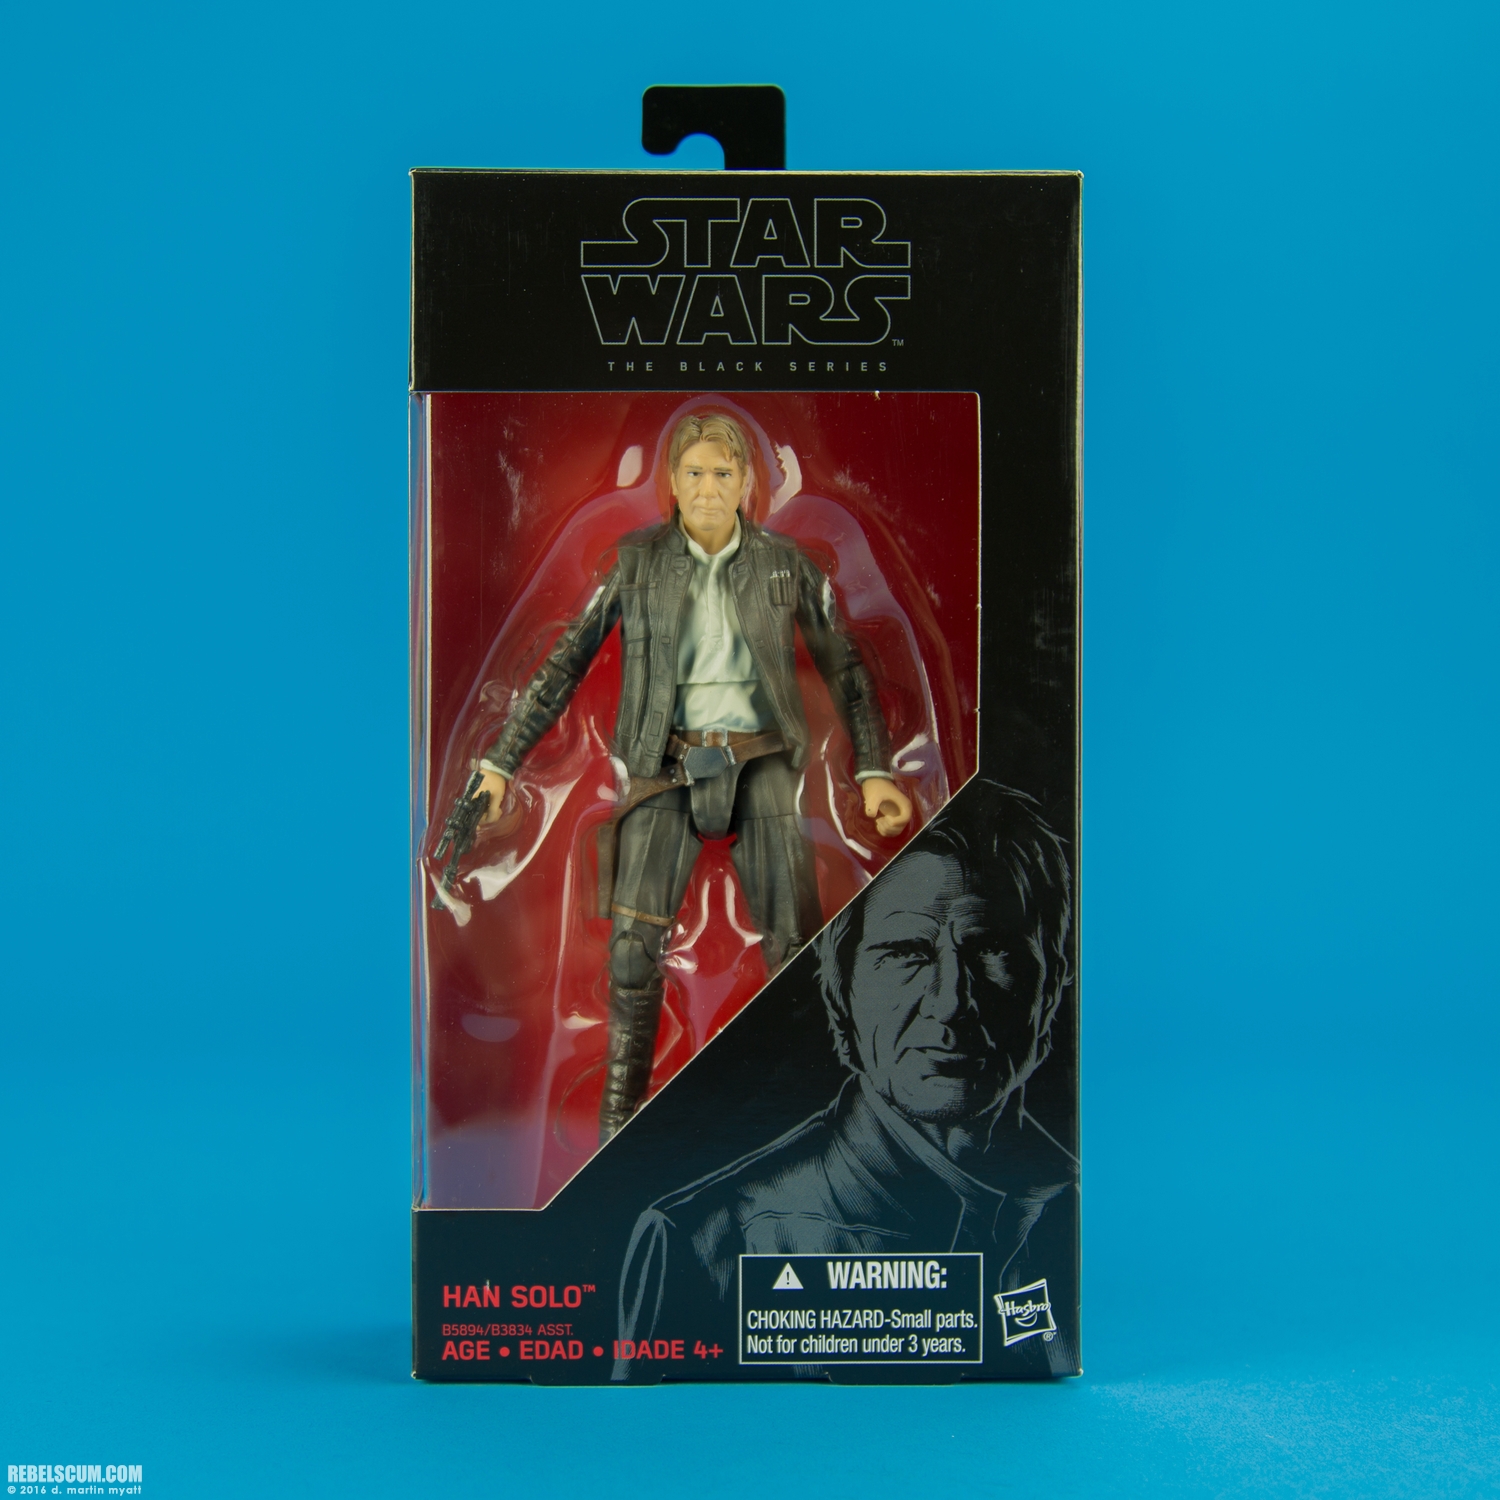 Han-Solo-18-The-Black-Series-6-inch-Star-Wars-Hasbro-010.jpg